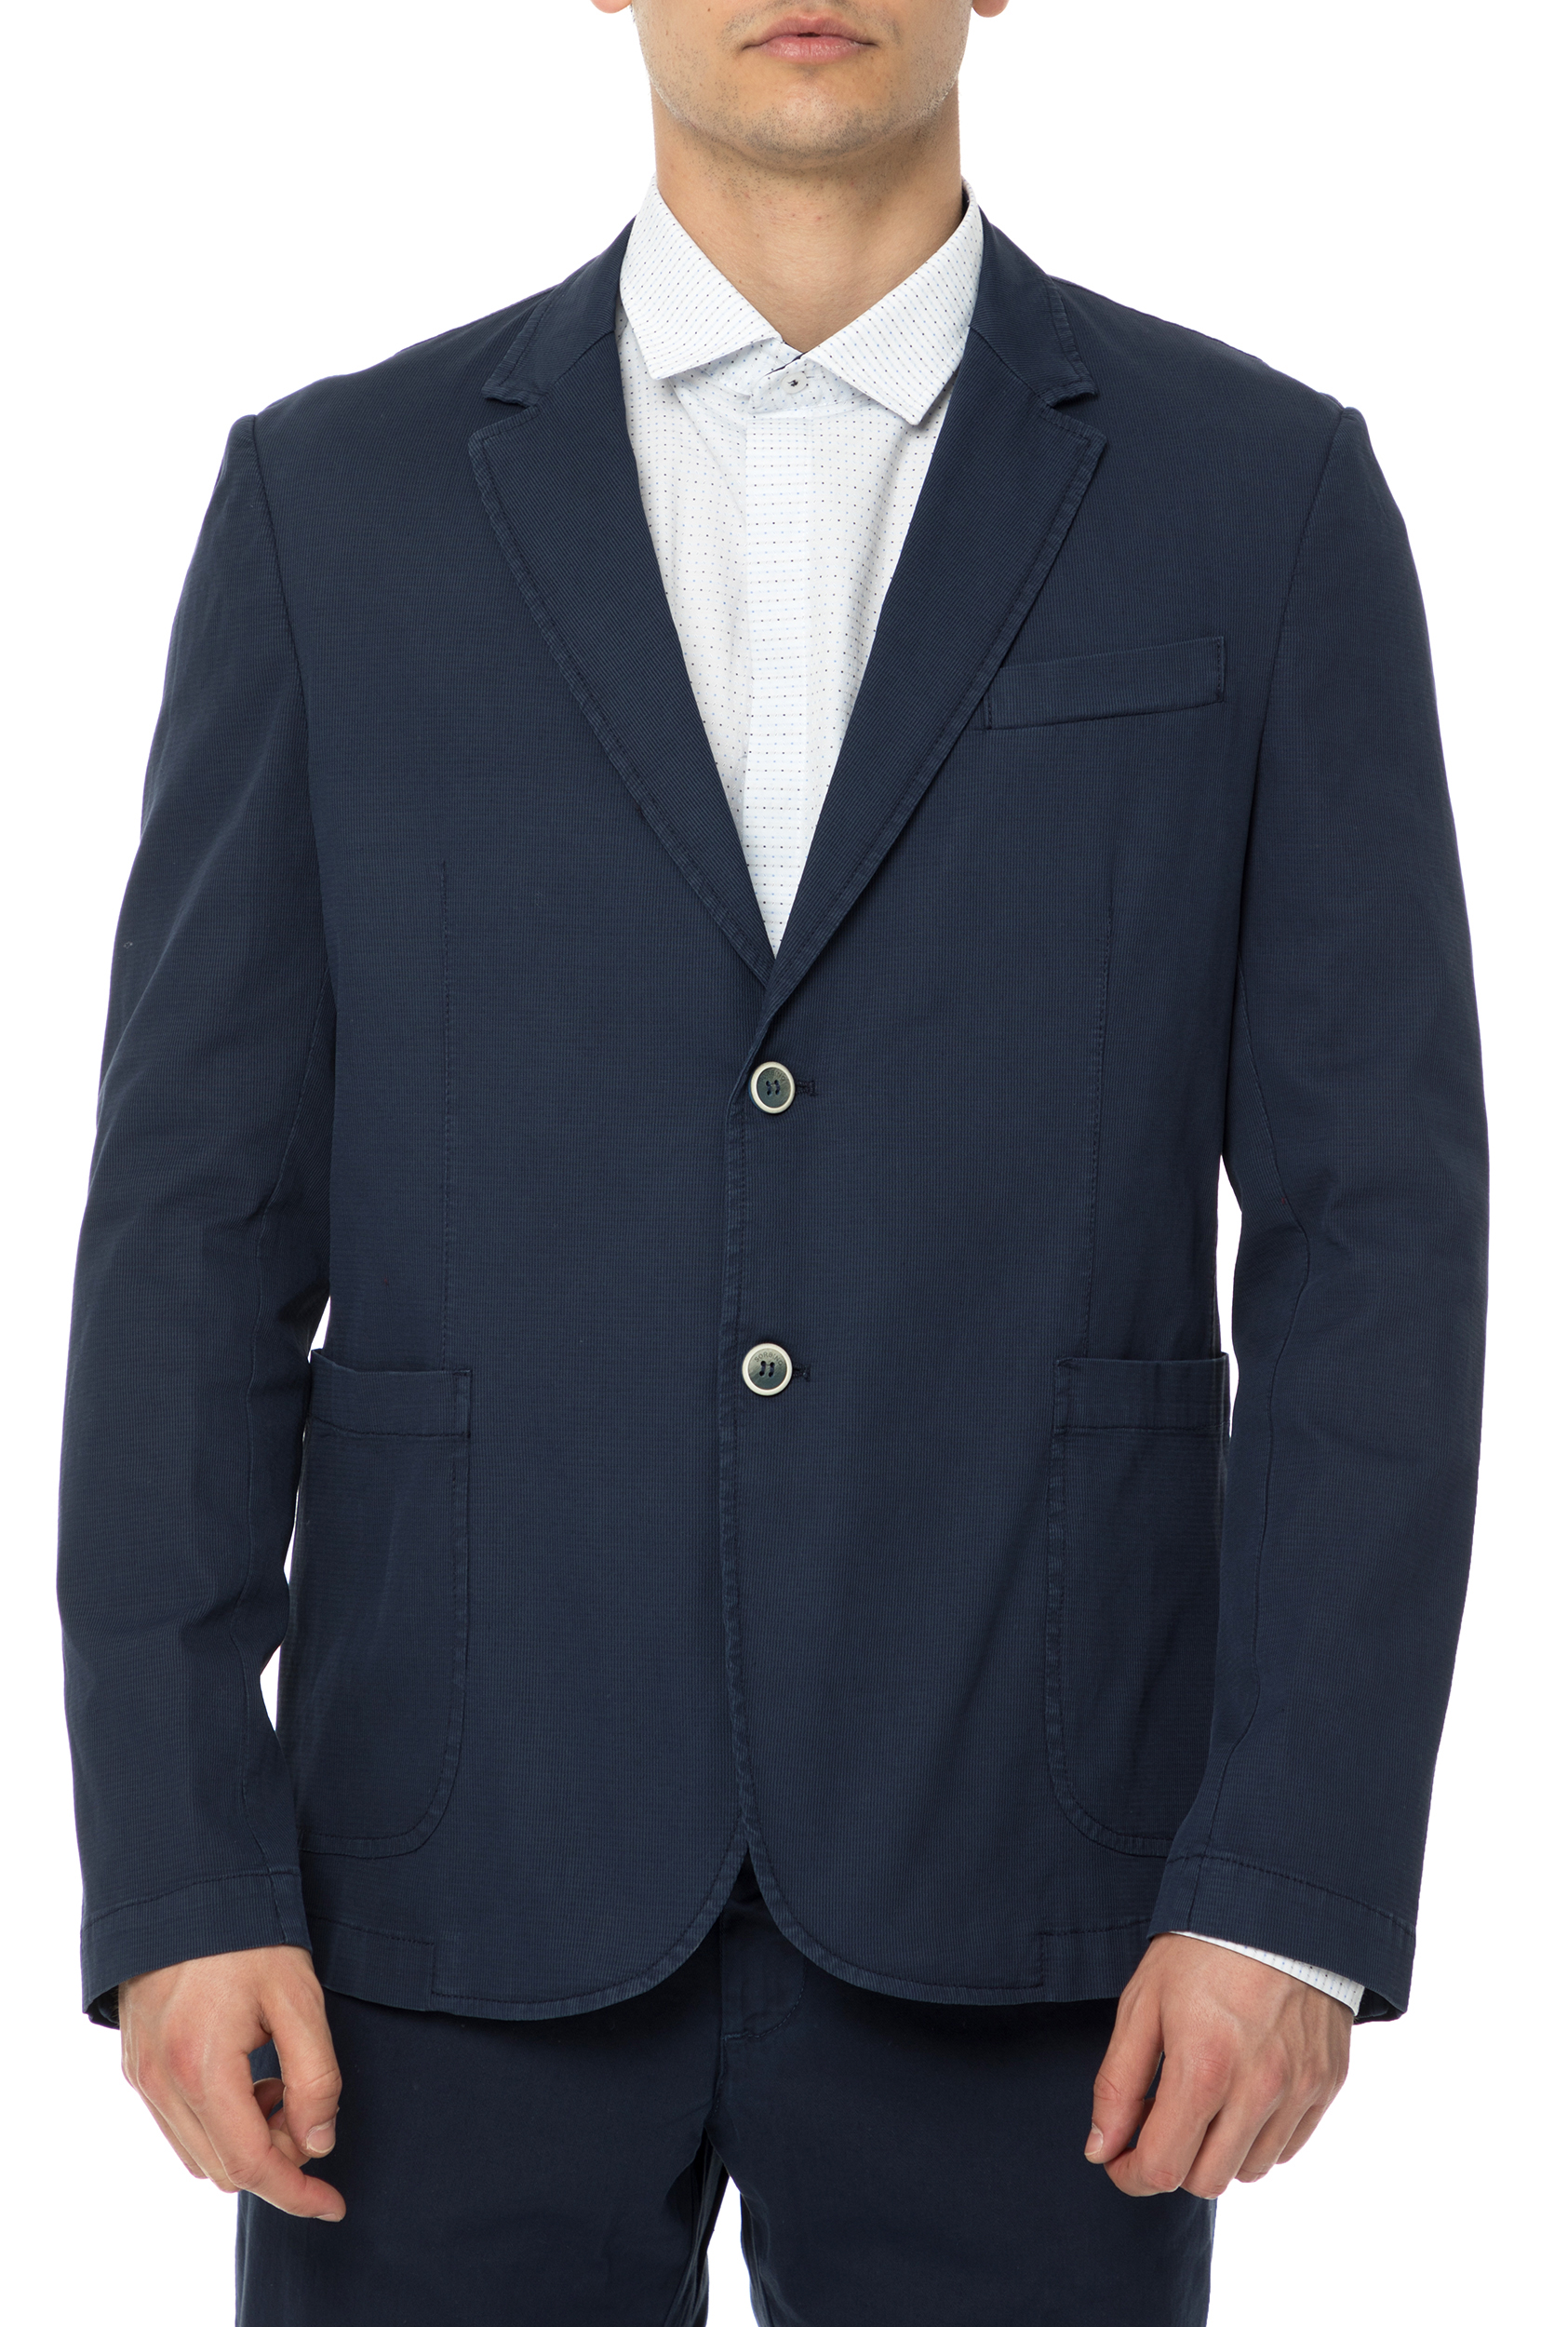 SORBINO - Ανδρικό σακάκι SORBINO μπλε Ανδρικά/Ρούχα/Πανωφόρια/Σακάκια